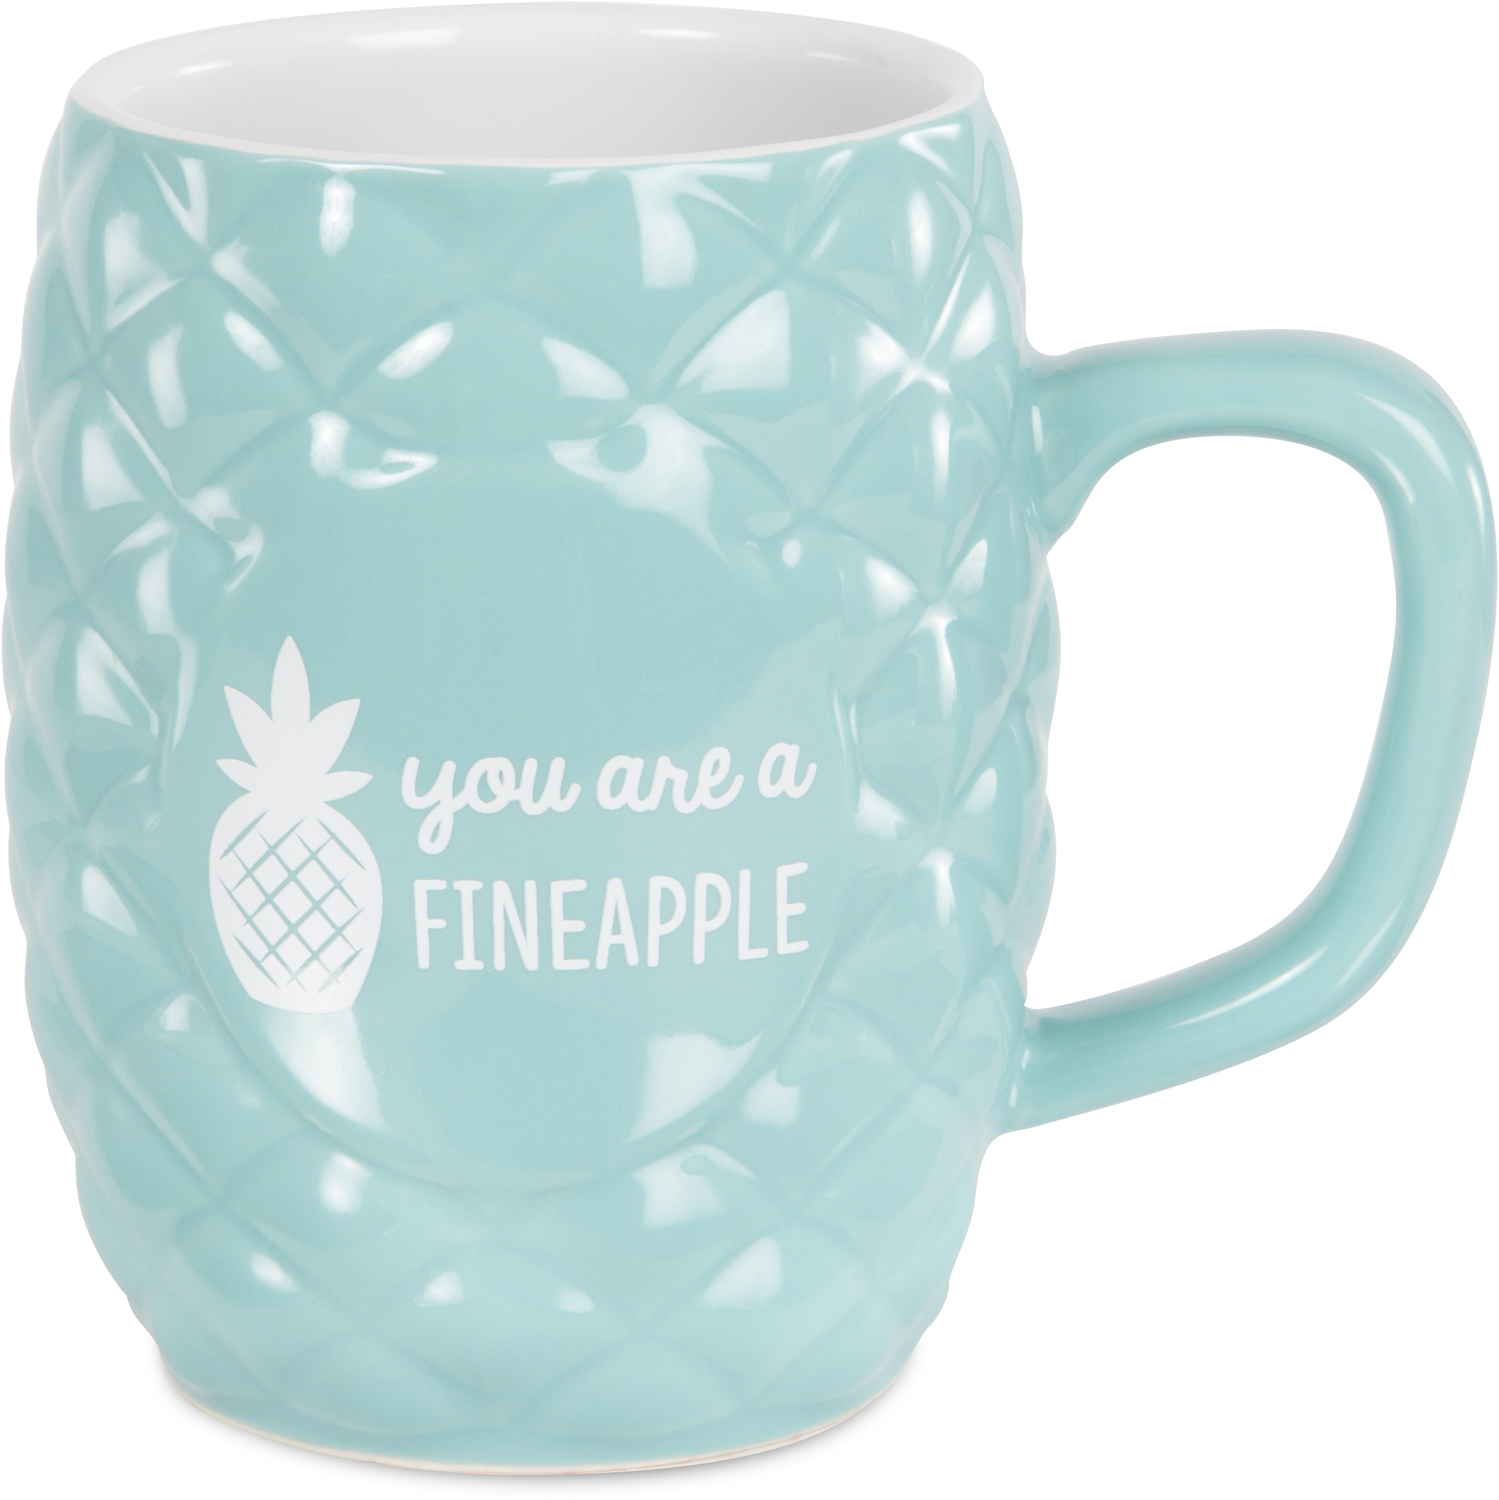 Fineapple by Livin' on the Wedge - Fineapple - 18 oz Pineapple Mug